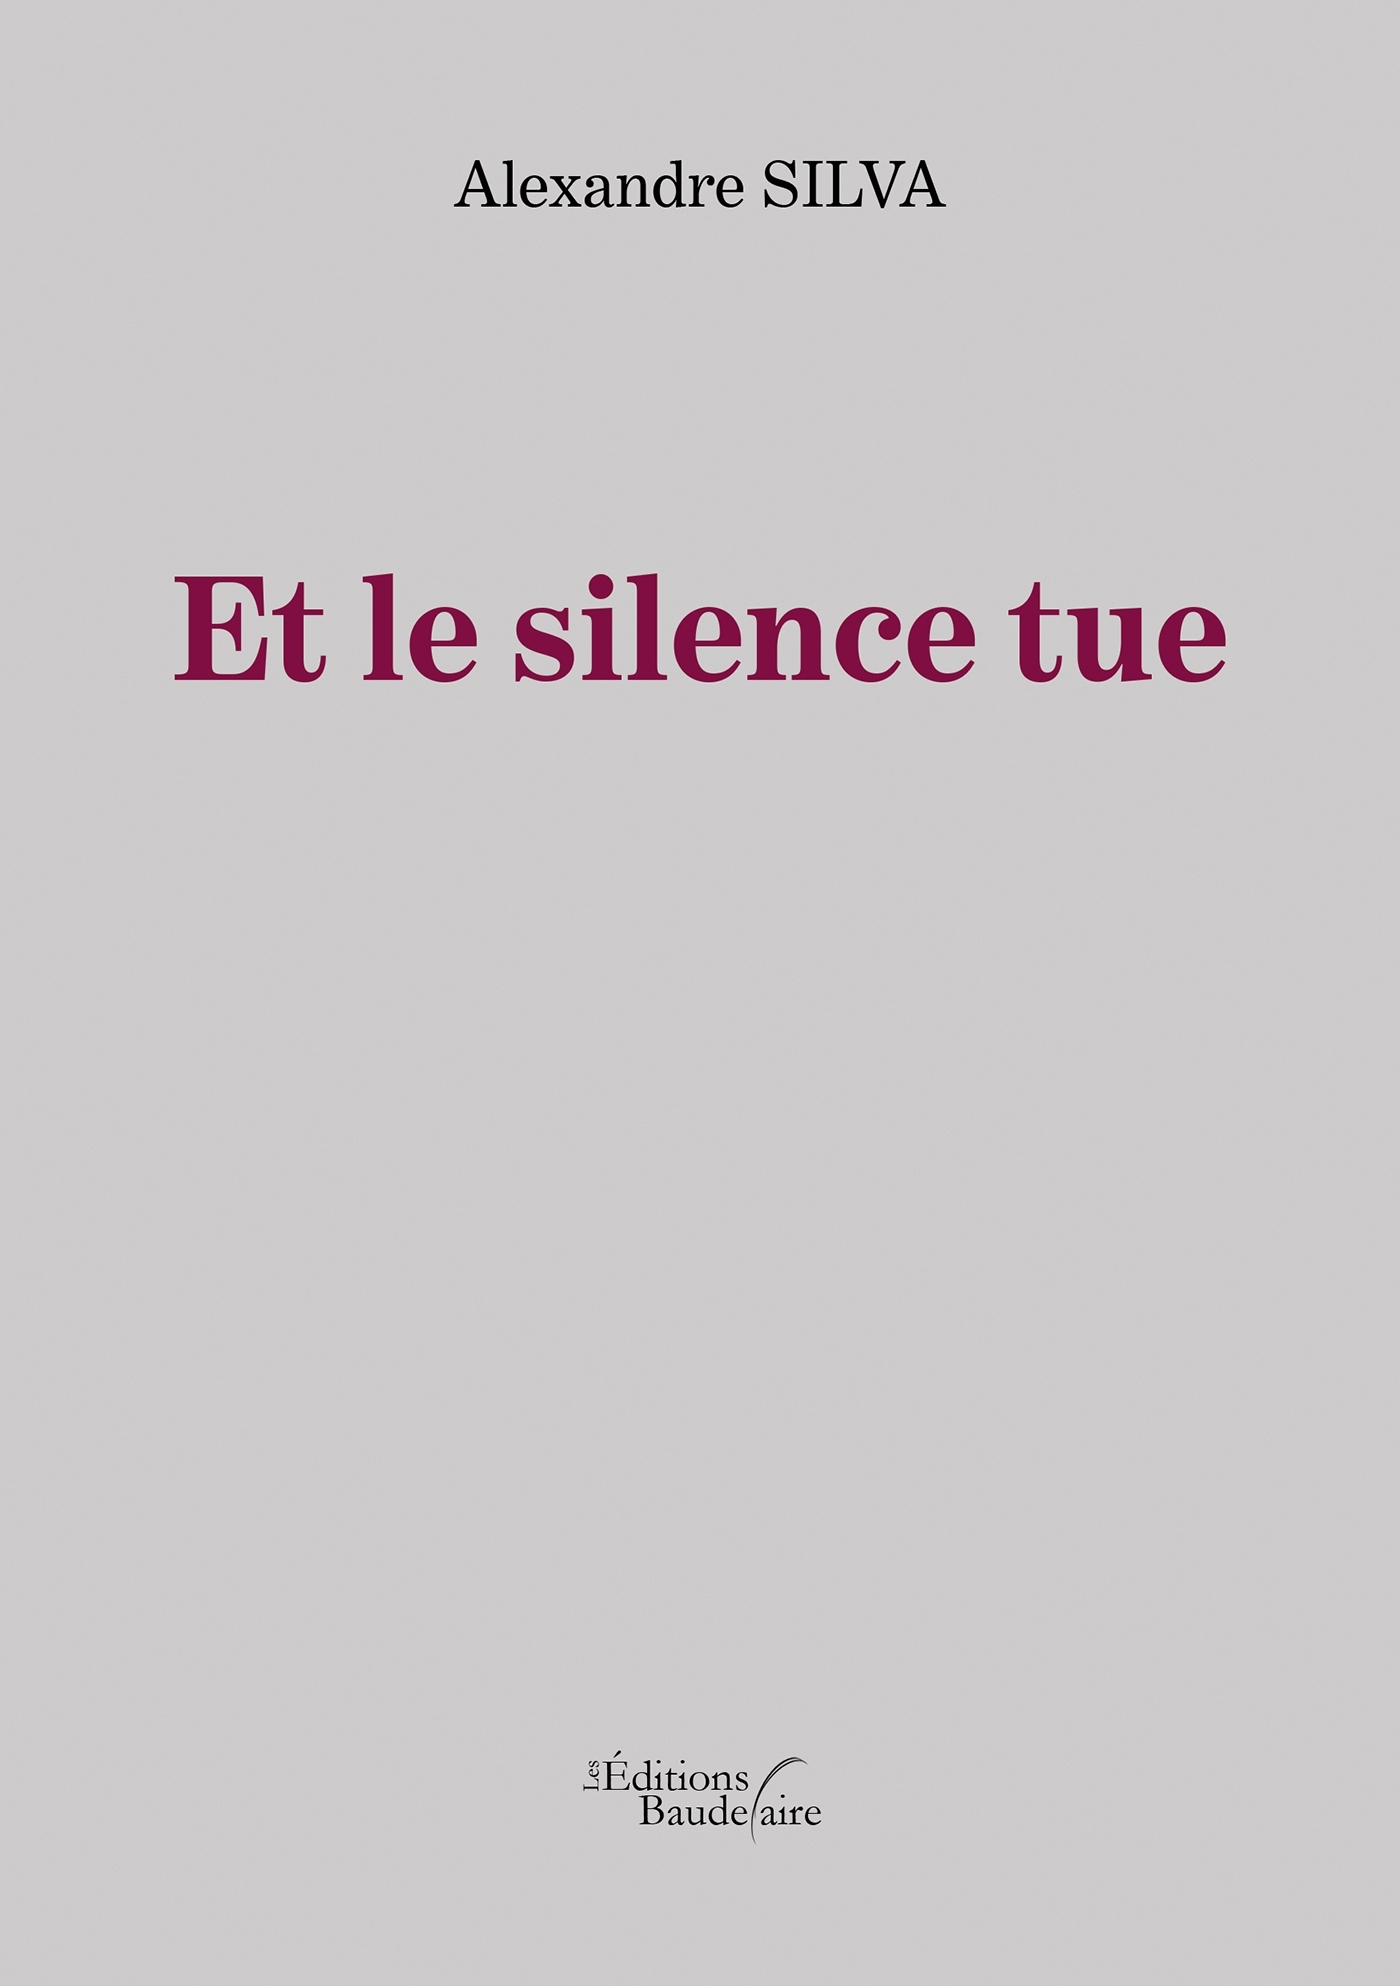 Et le silence tue (9791020337627-front-cover)